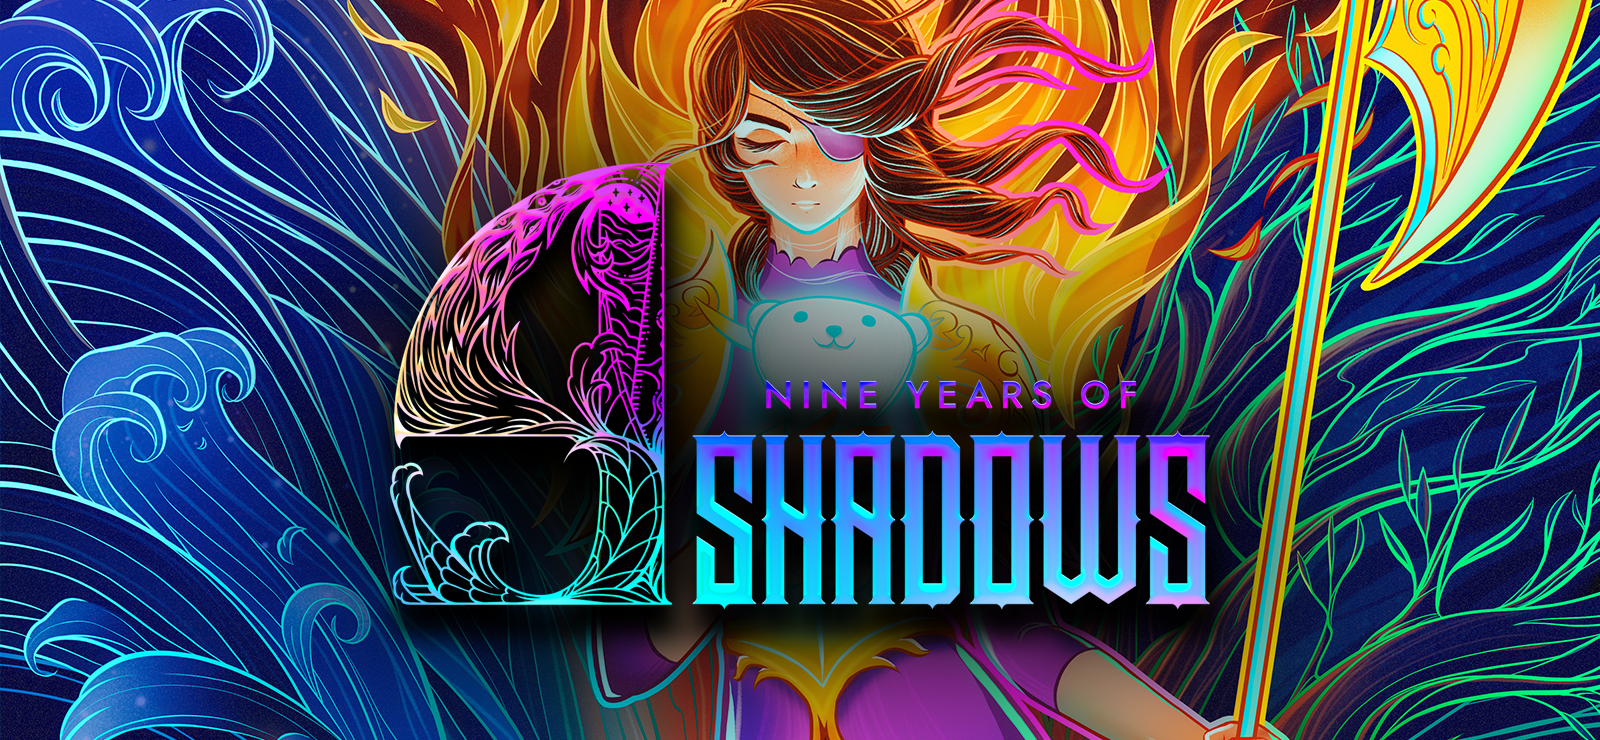 9 Years Of Shadows